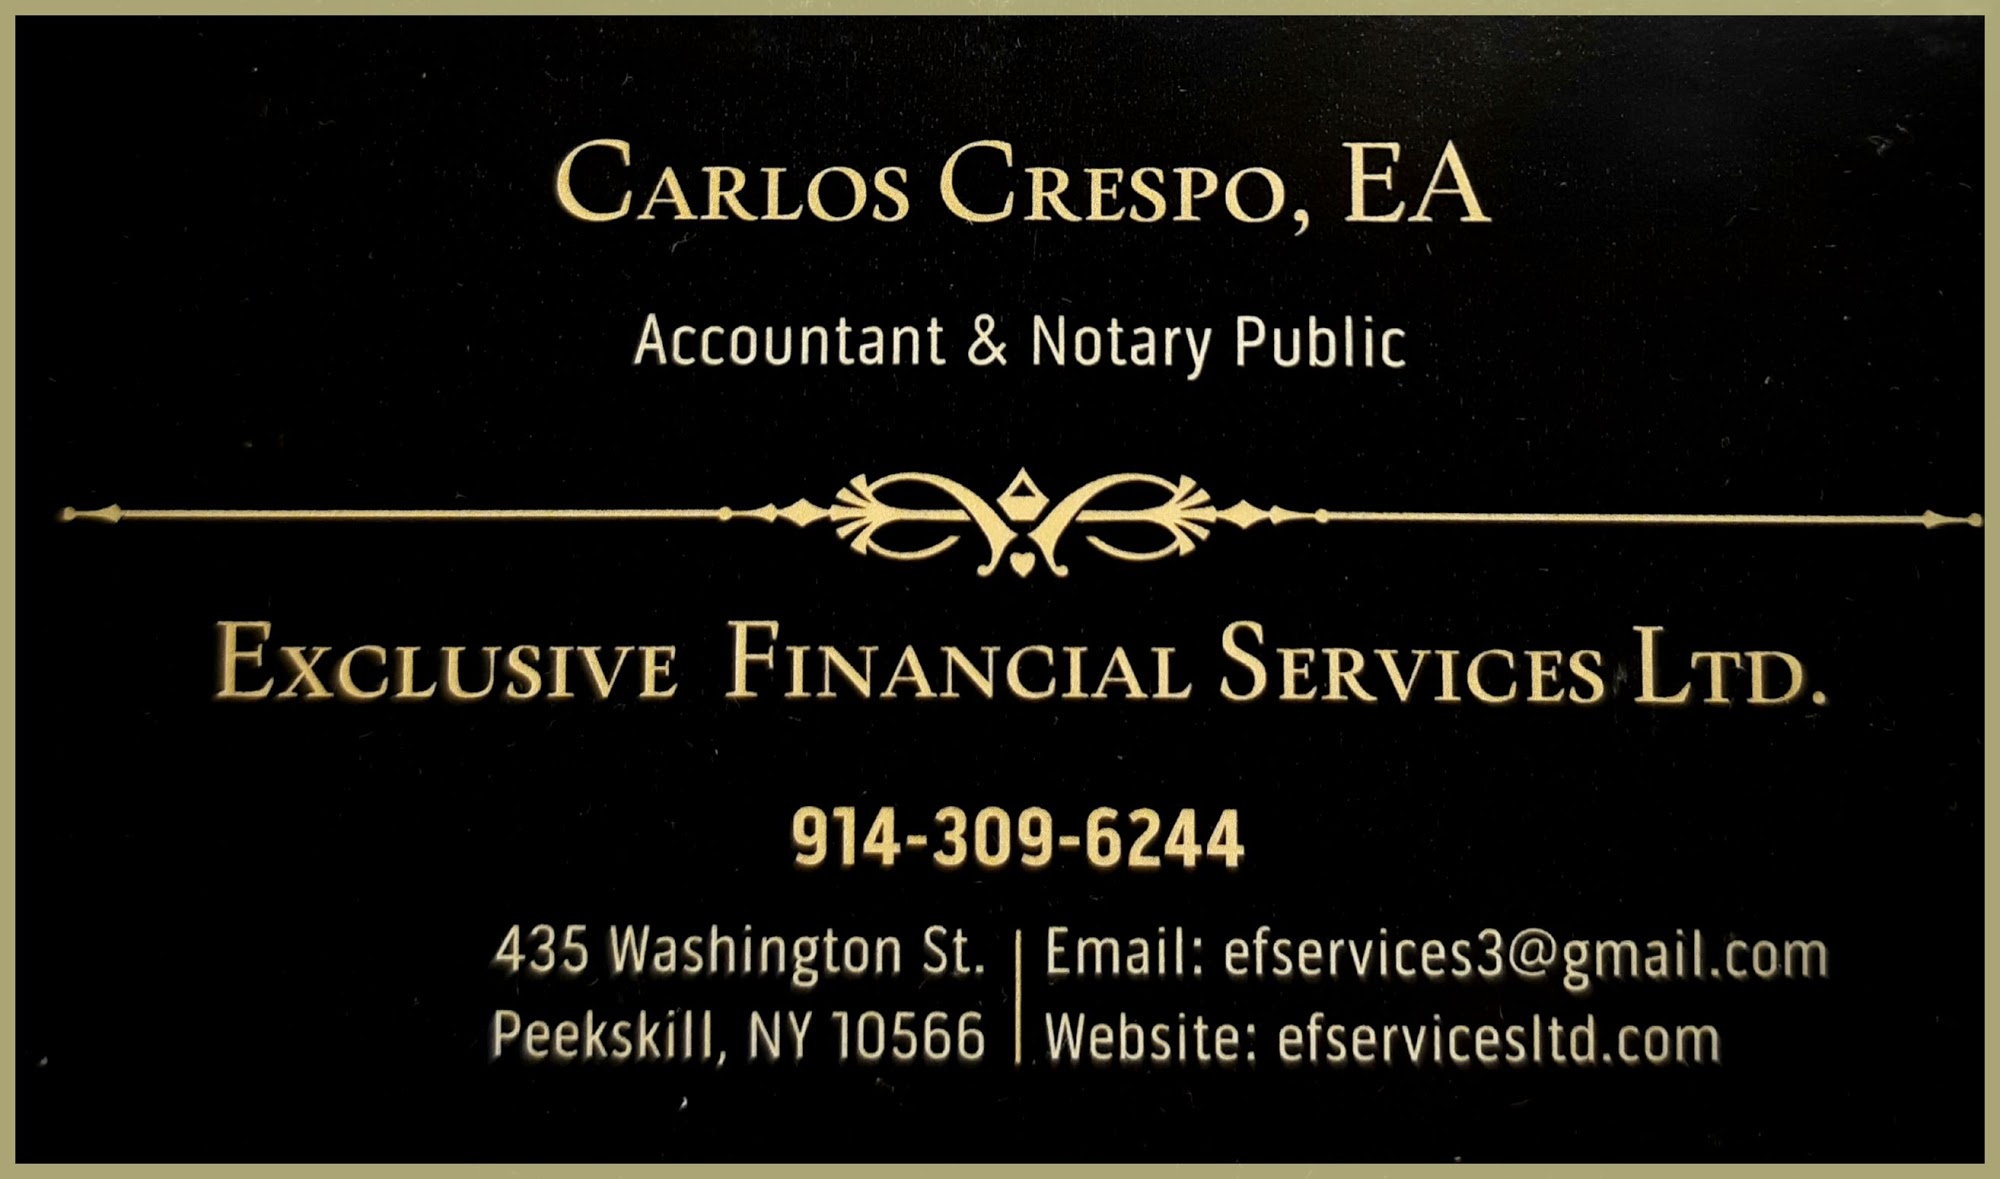 Exclusive Financial Services Ltd.